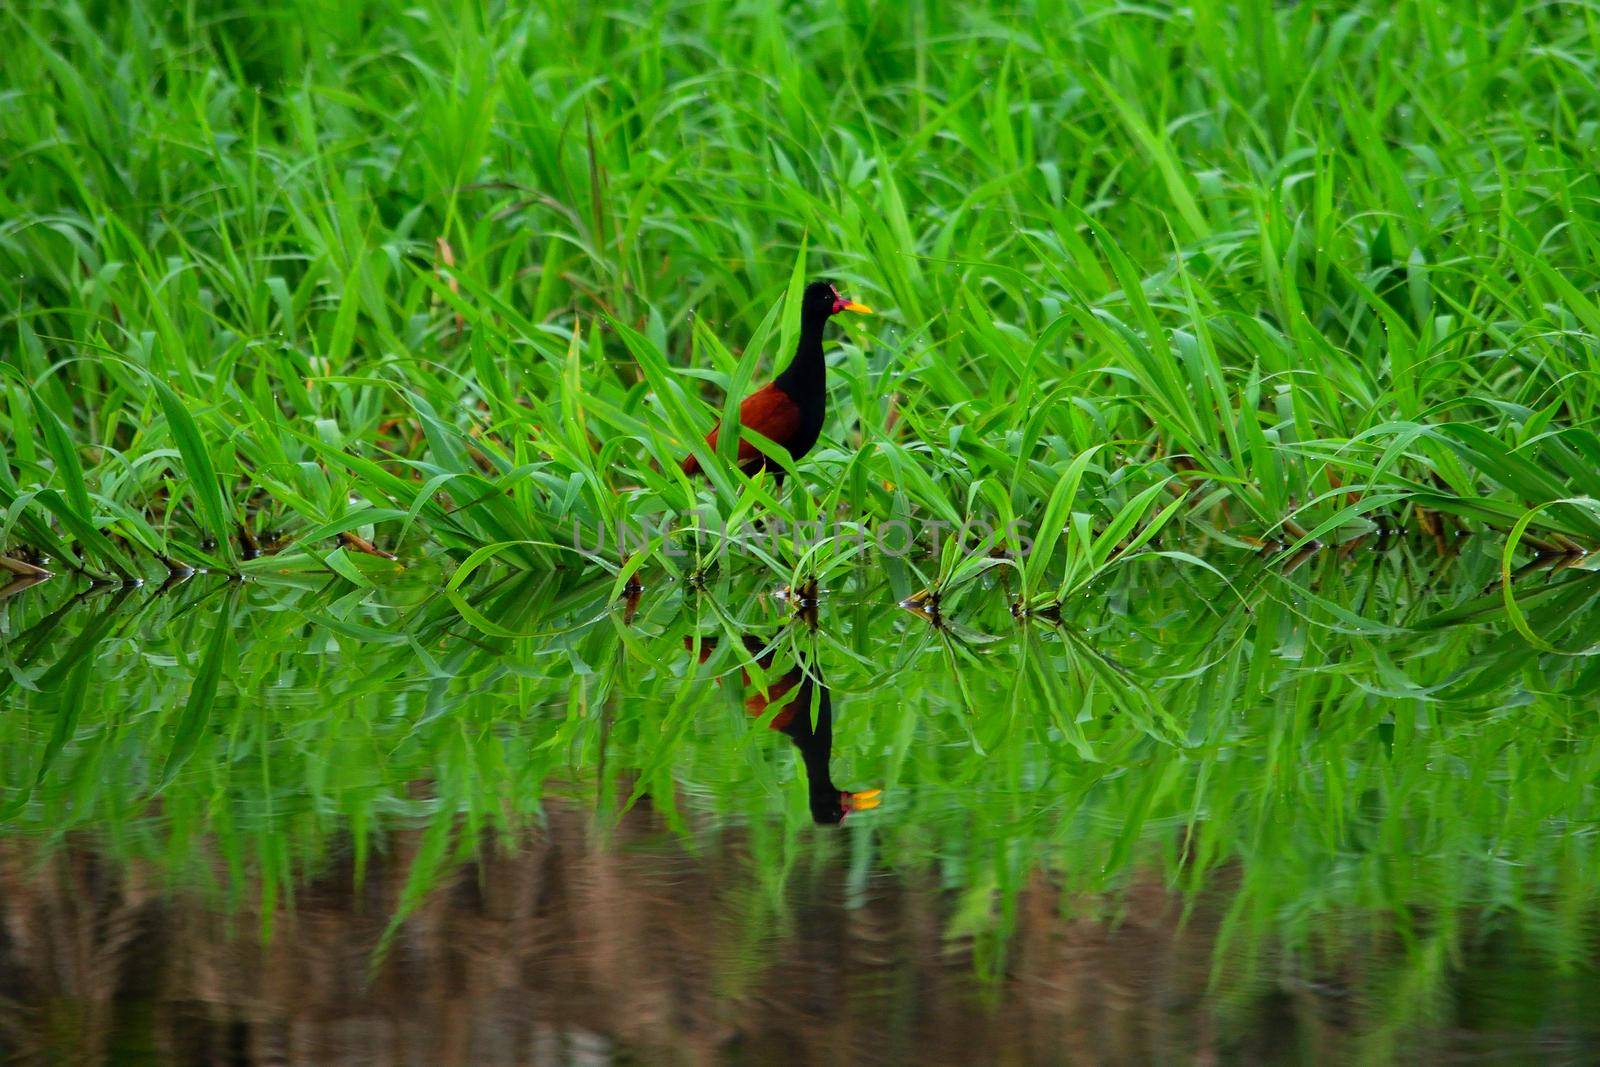 Bird in Amazon rainforest, Rio Negro, Brazil by silentstock639